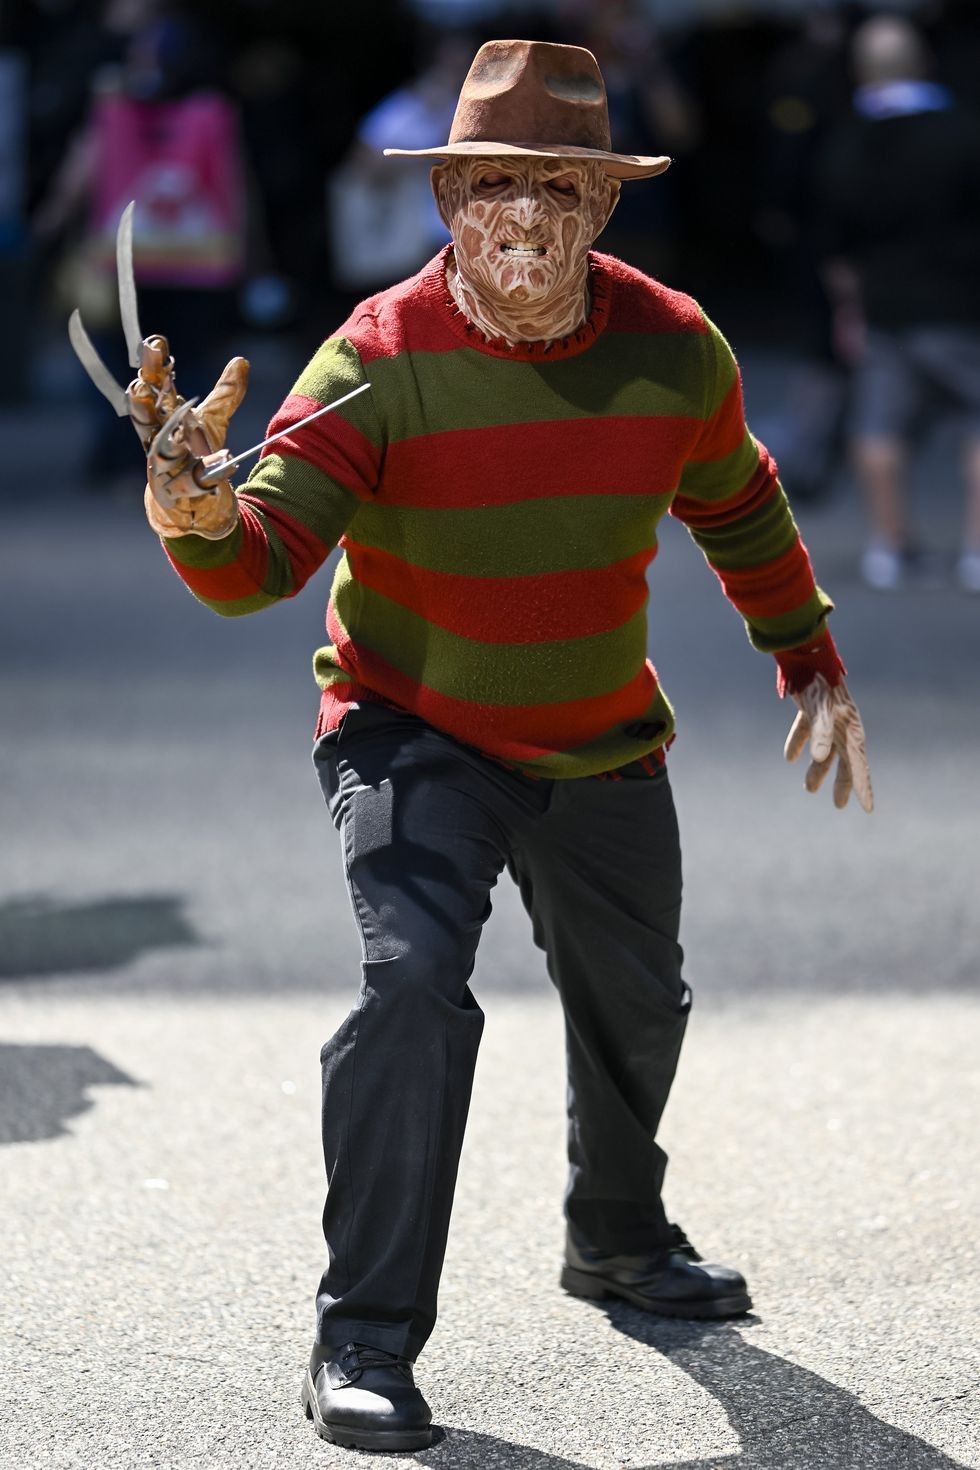 Krueger from A Nightmare on Elm Street